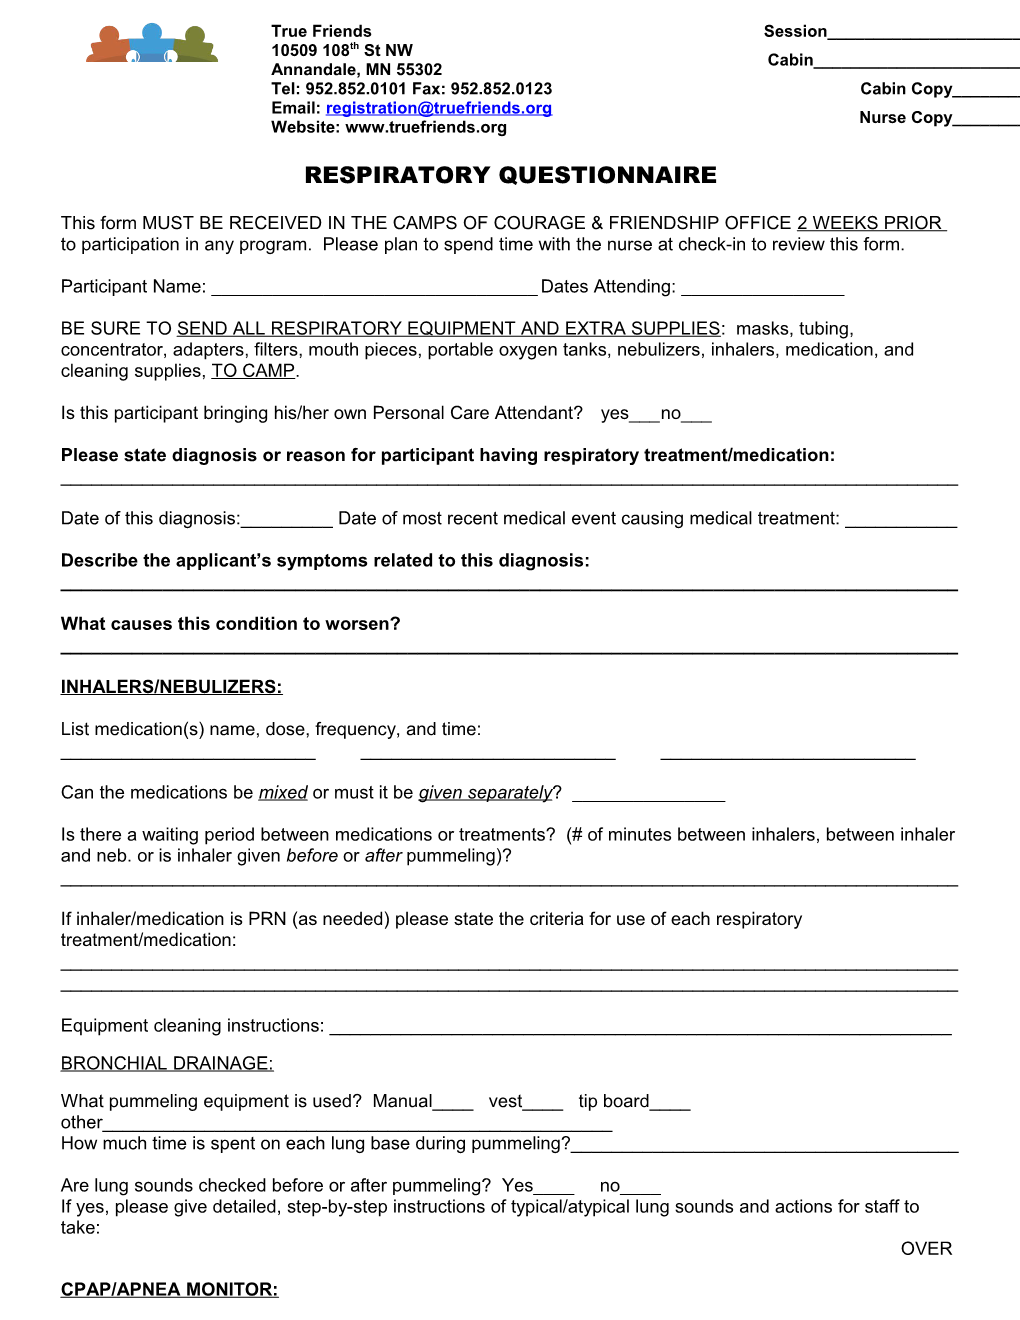 Respiratory Questionnaire